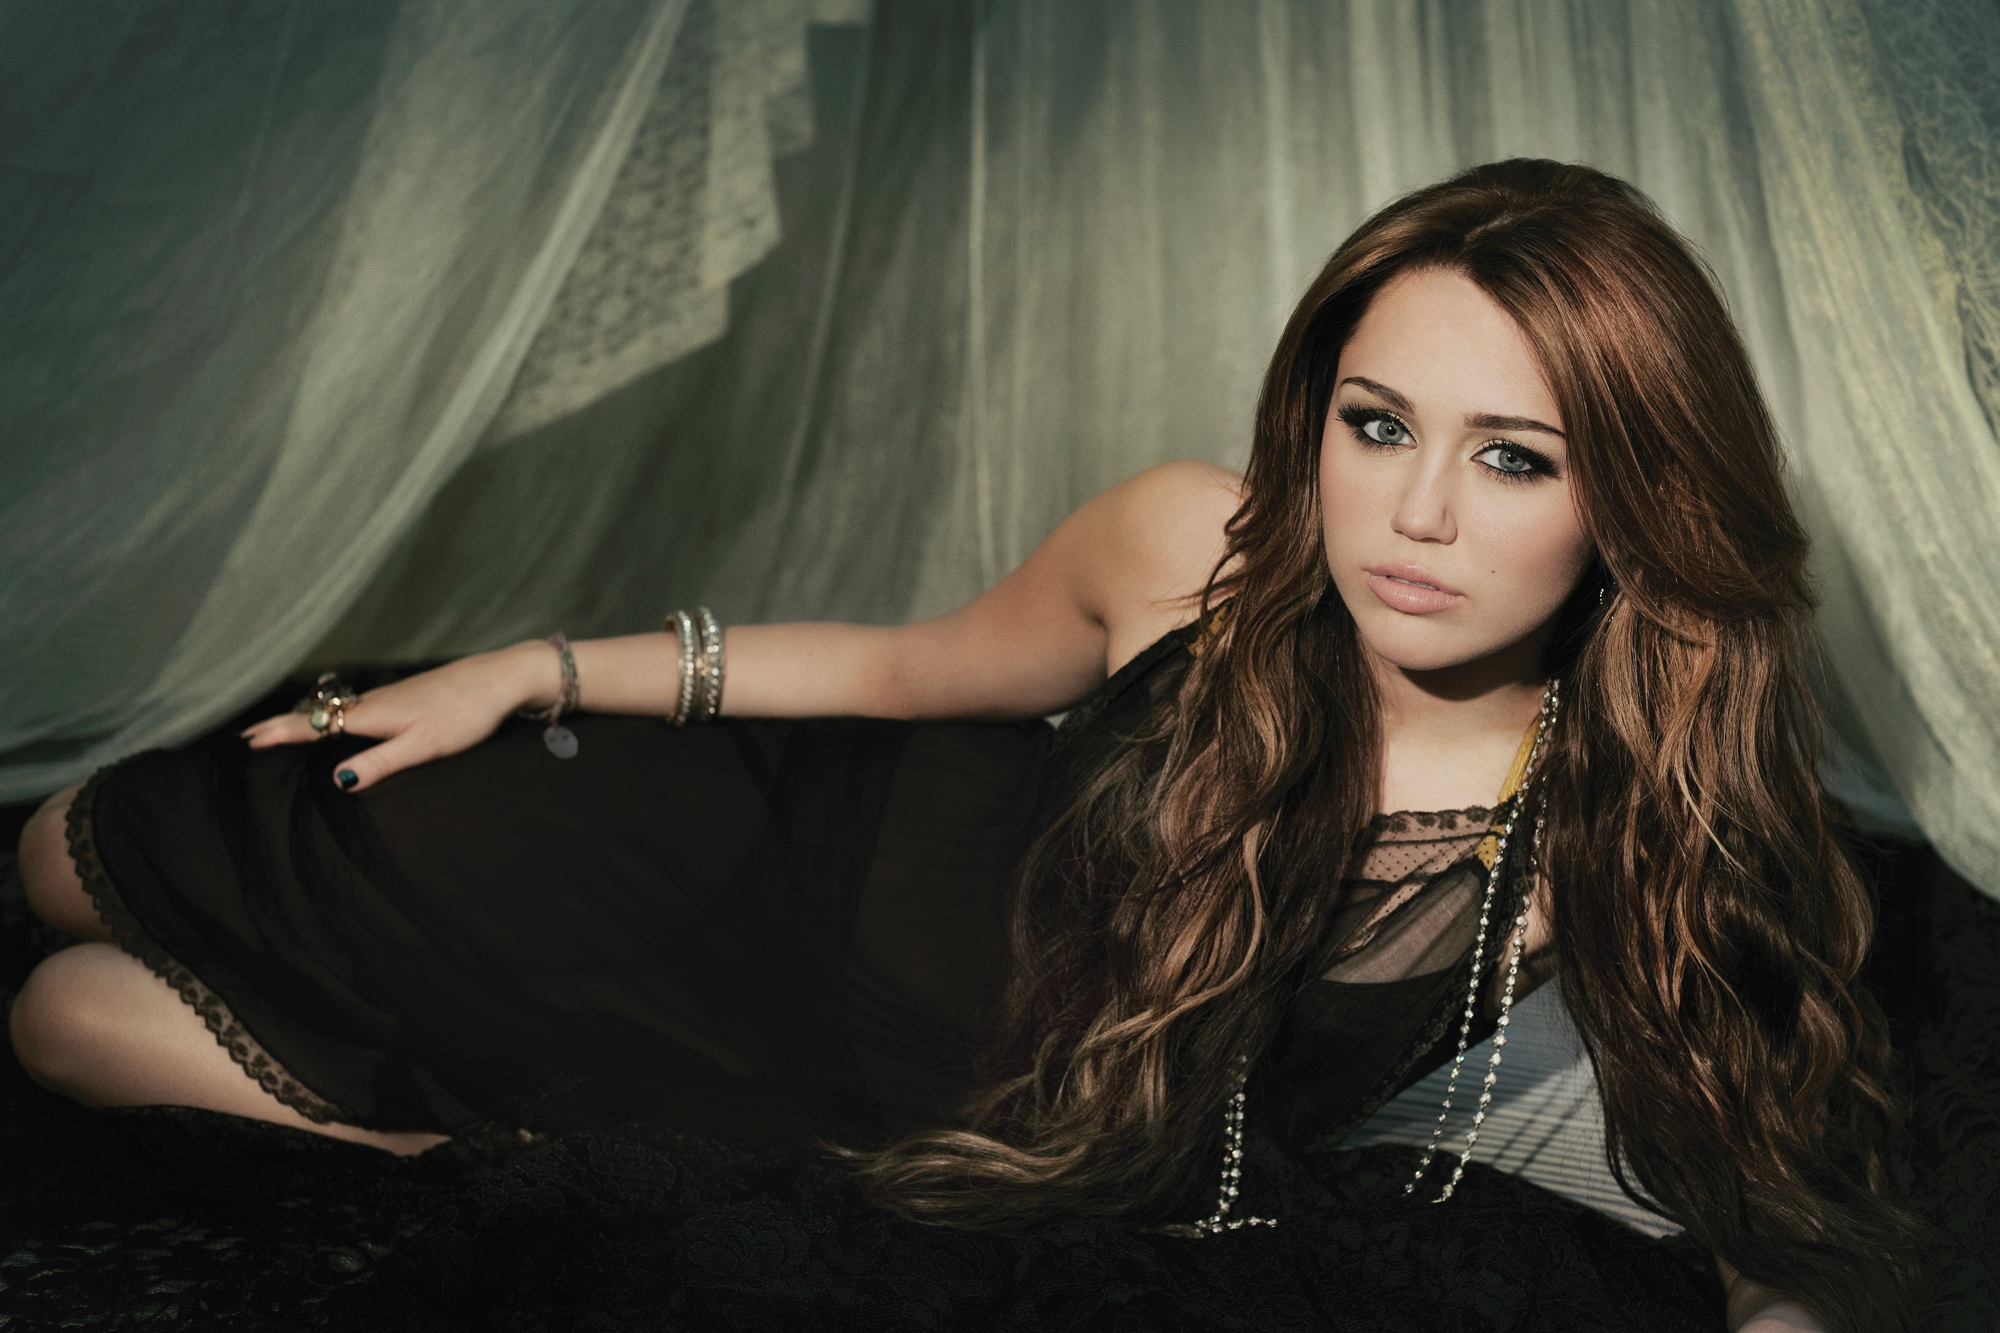 Young Hollywood Stars Image Miley Cyrus HD Wallpaper And